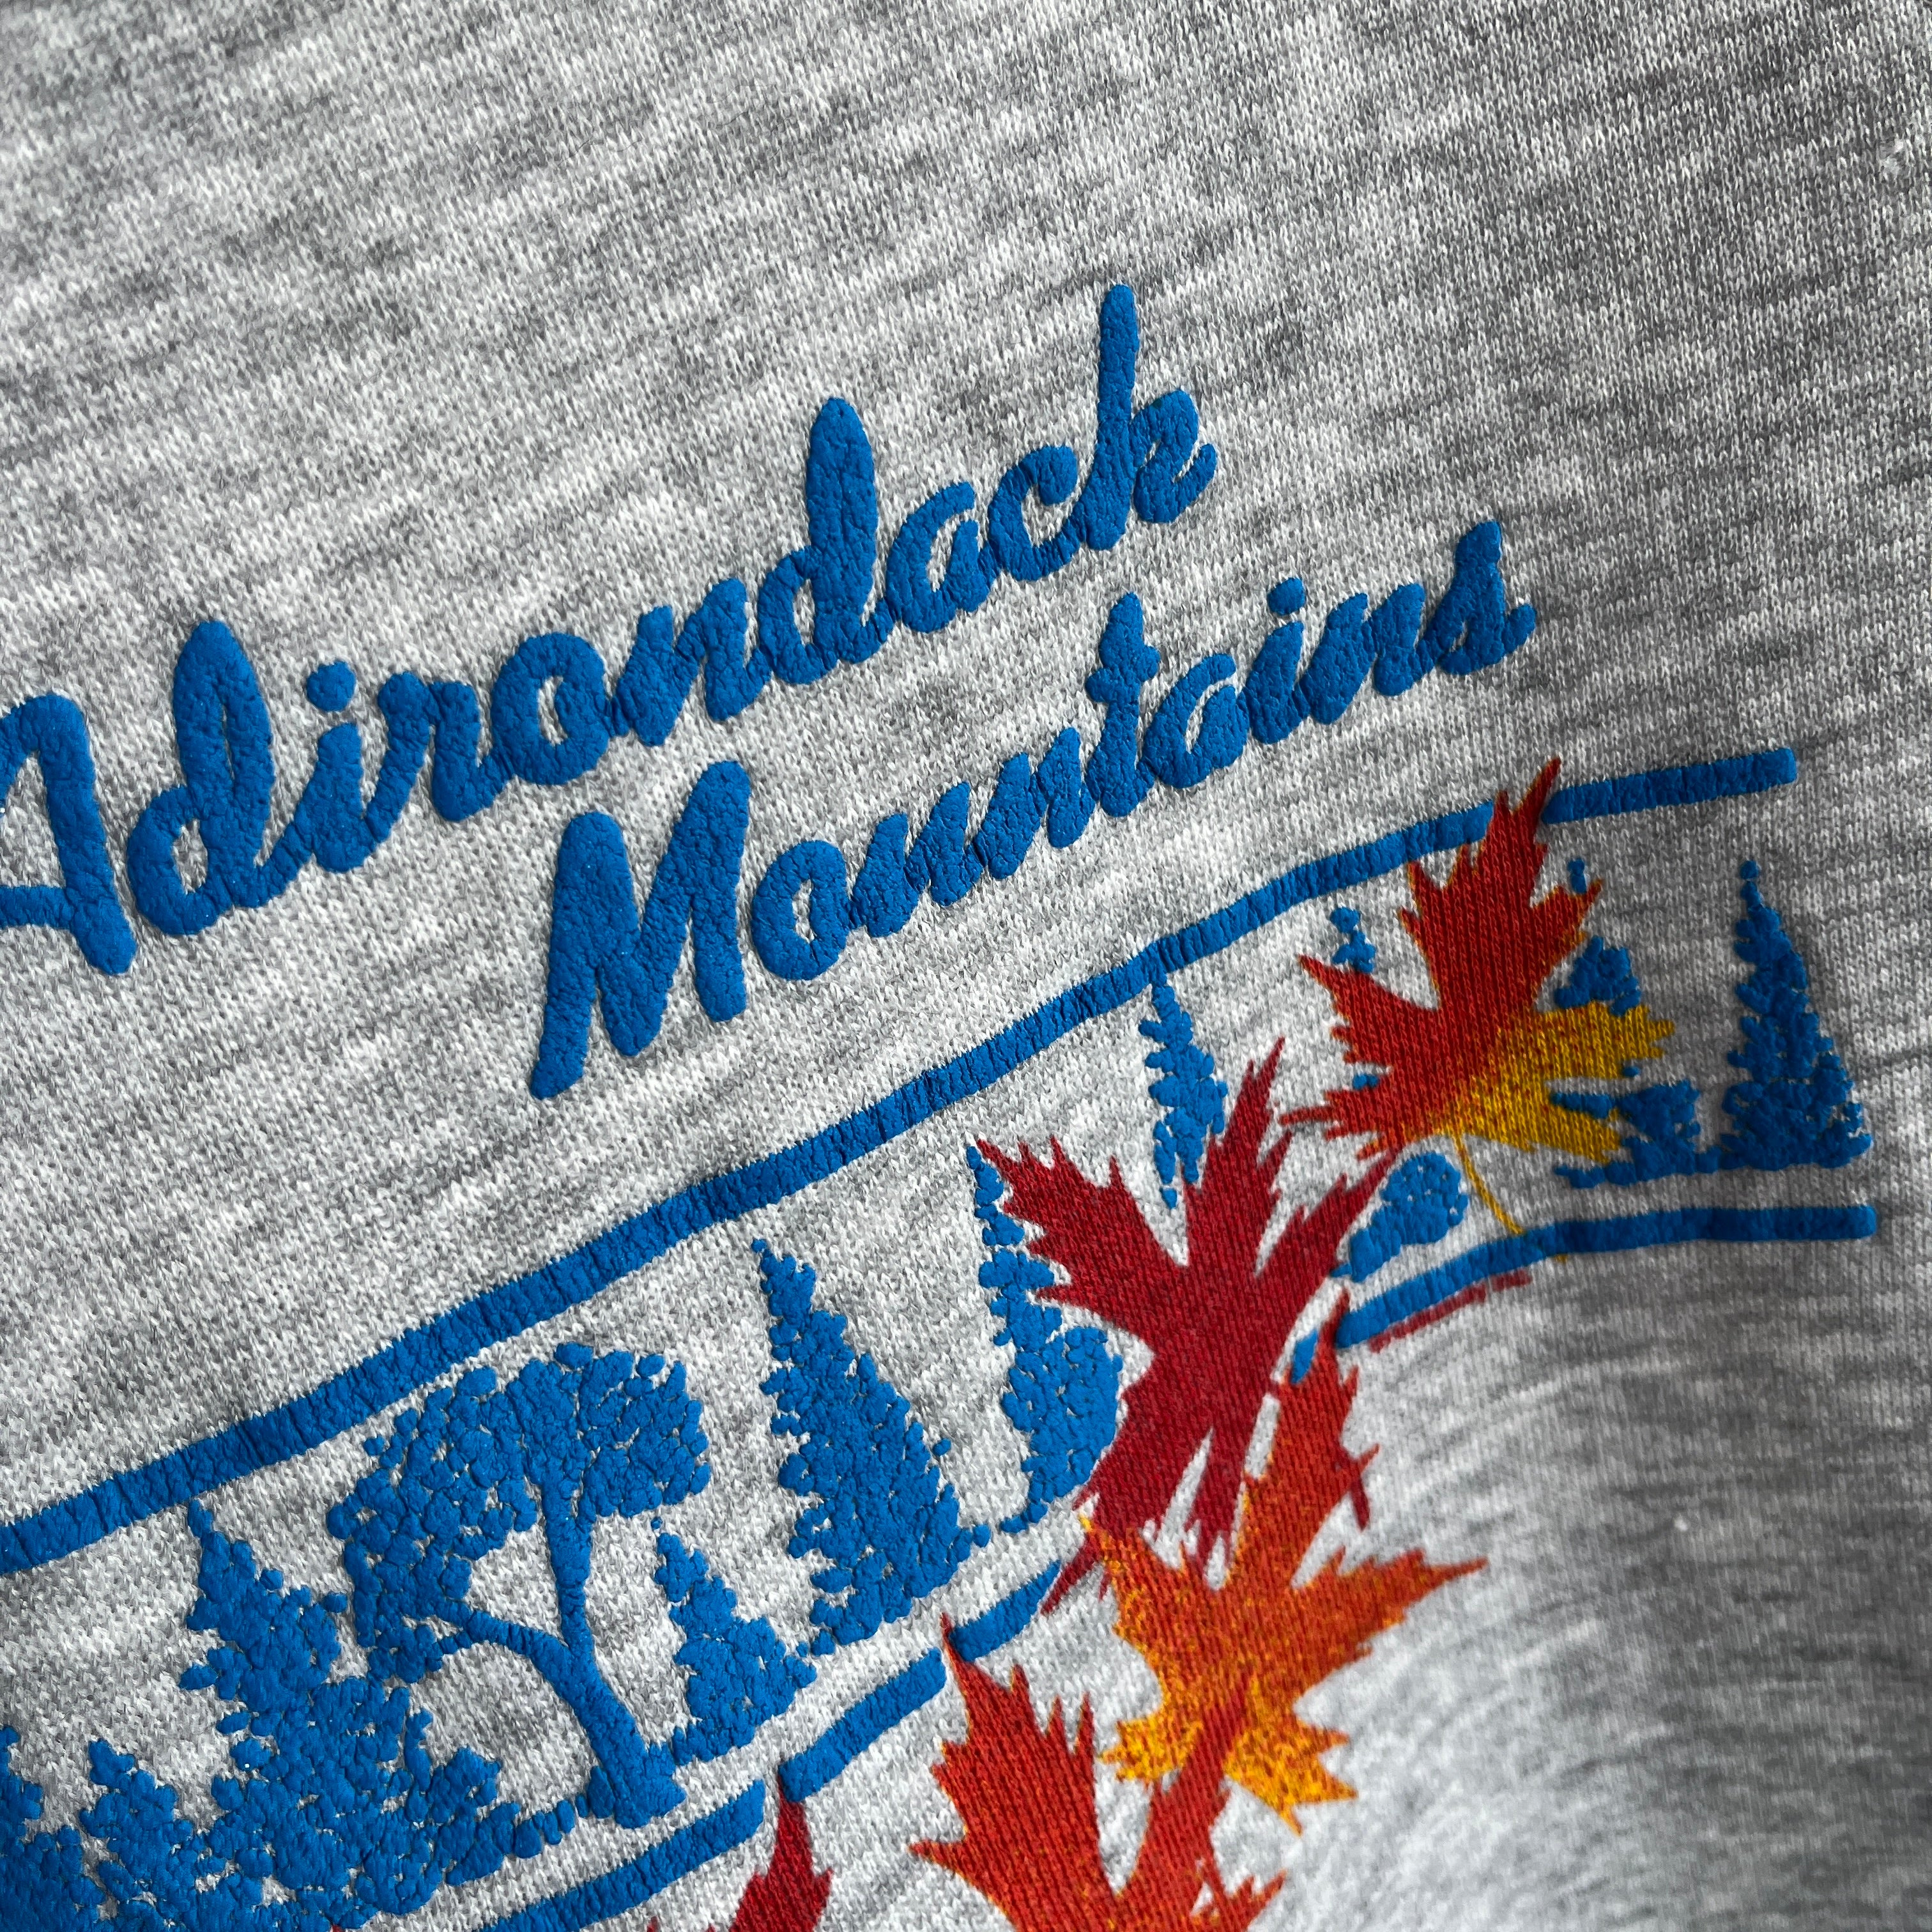 1980s Adirondack Mountains Sweatshirt on a Bassett Walker